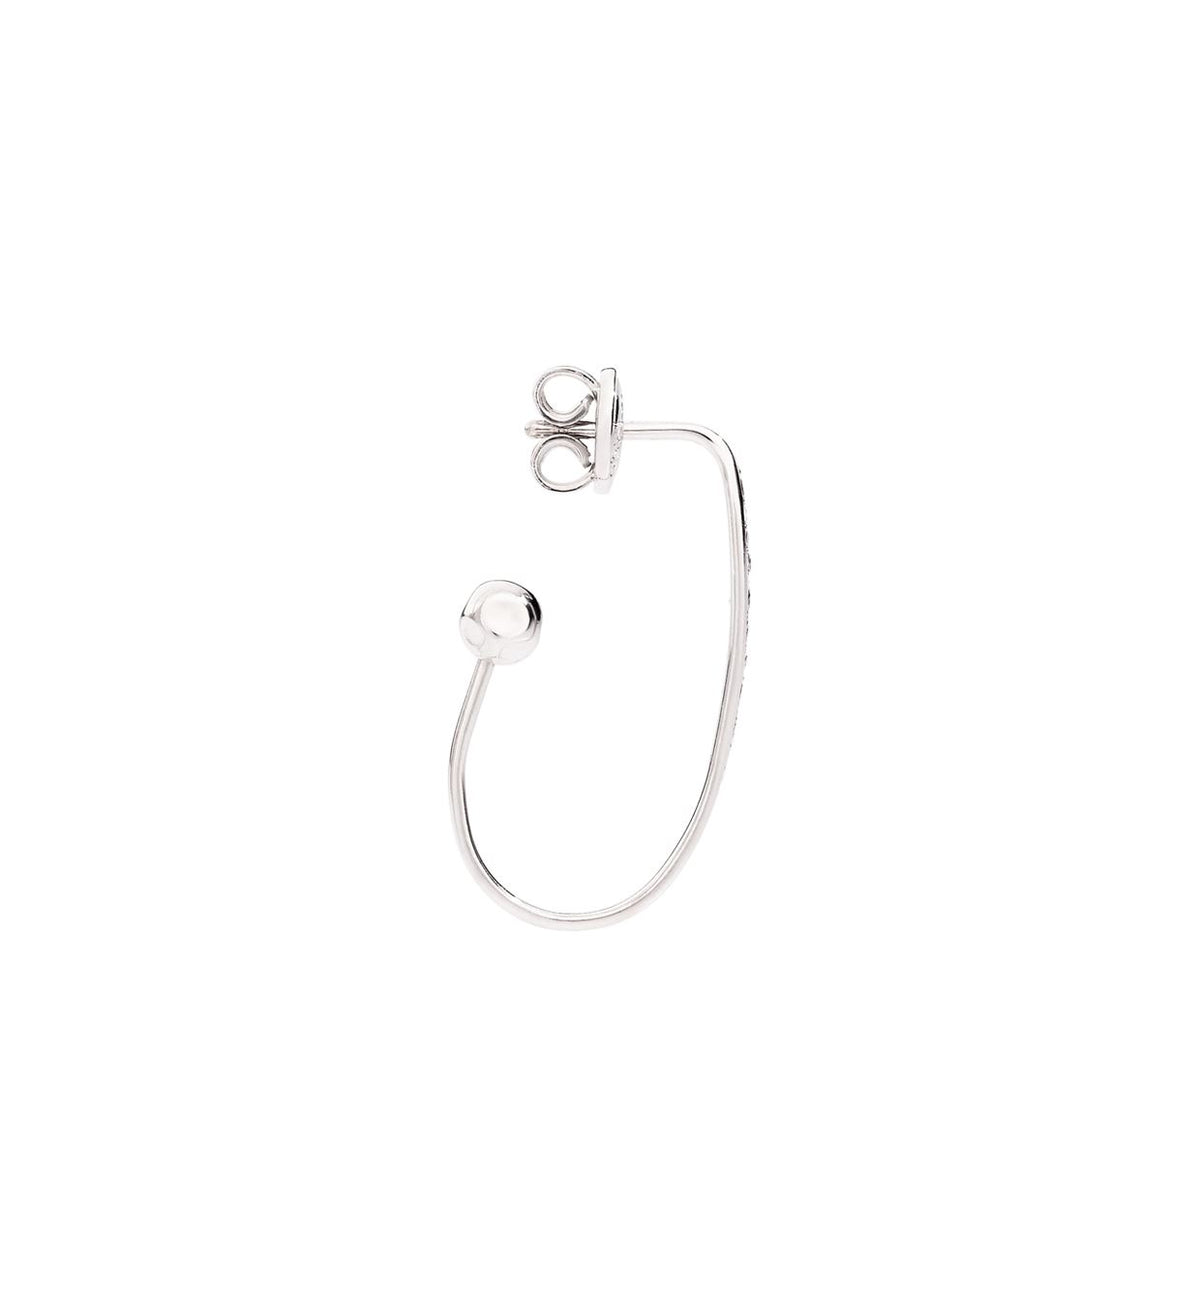 DoDo Essentials Oval Earrings in 18k White Gold with Diamonds - Orsini Jewellers NZ